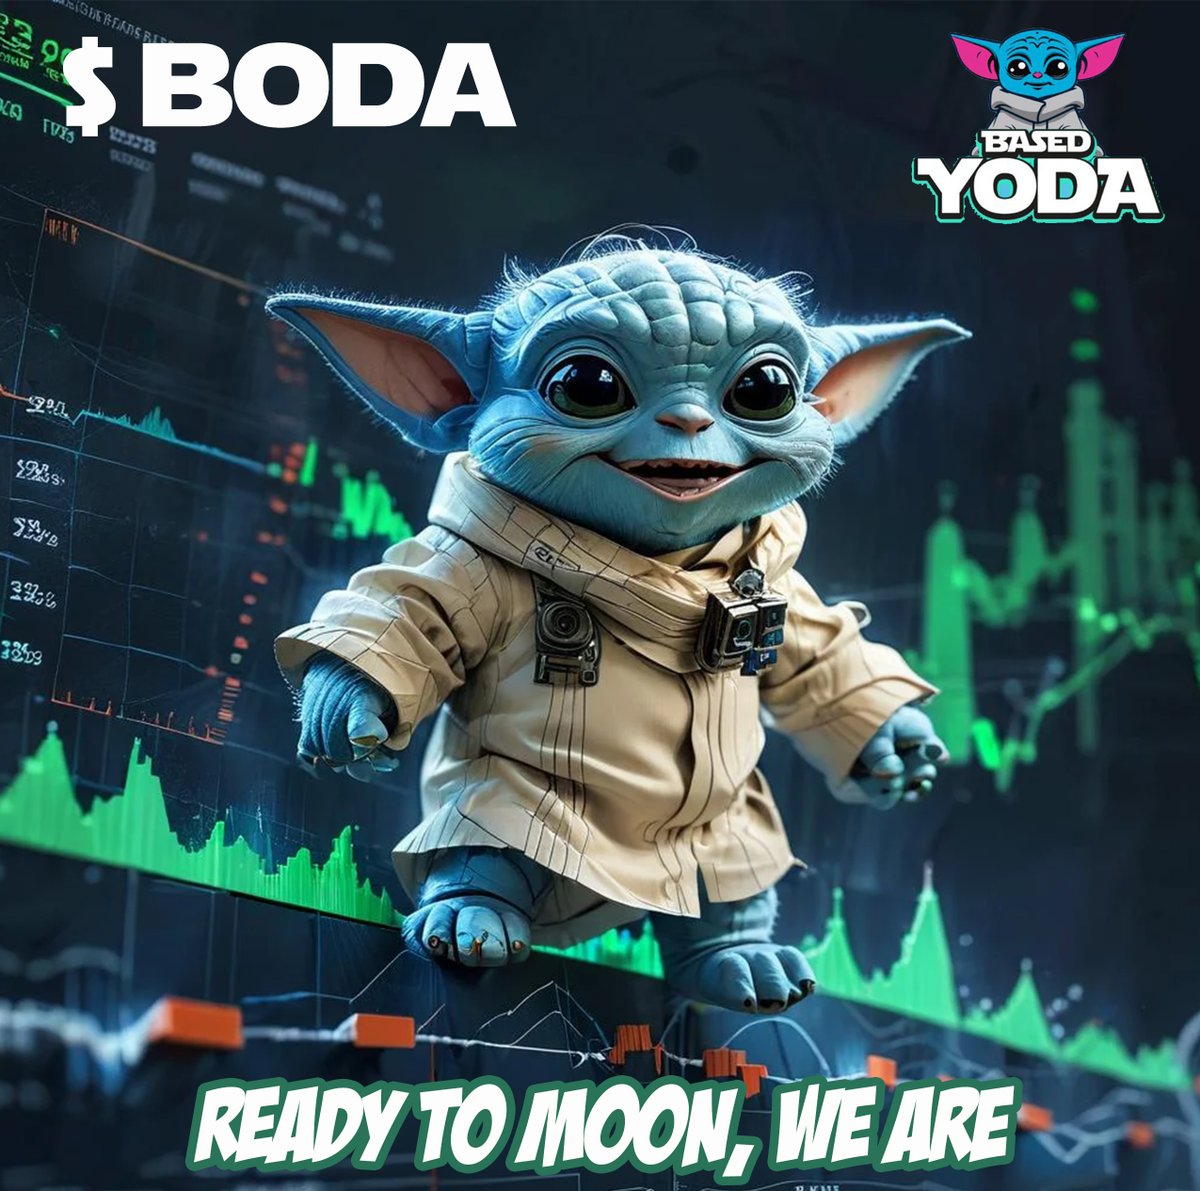 @LovLightLaugh @JakeGagain @YodaBase Yes it is and $BODA is Set to Moon! 🌕 Hop on or FOMO Later. #starwars #basedyoda #memewars #beyondbillions @YodaBase